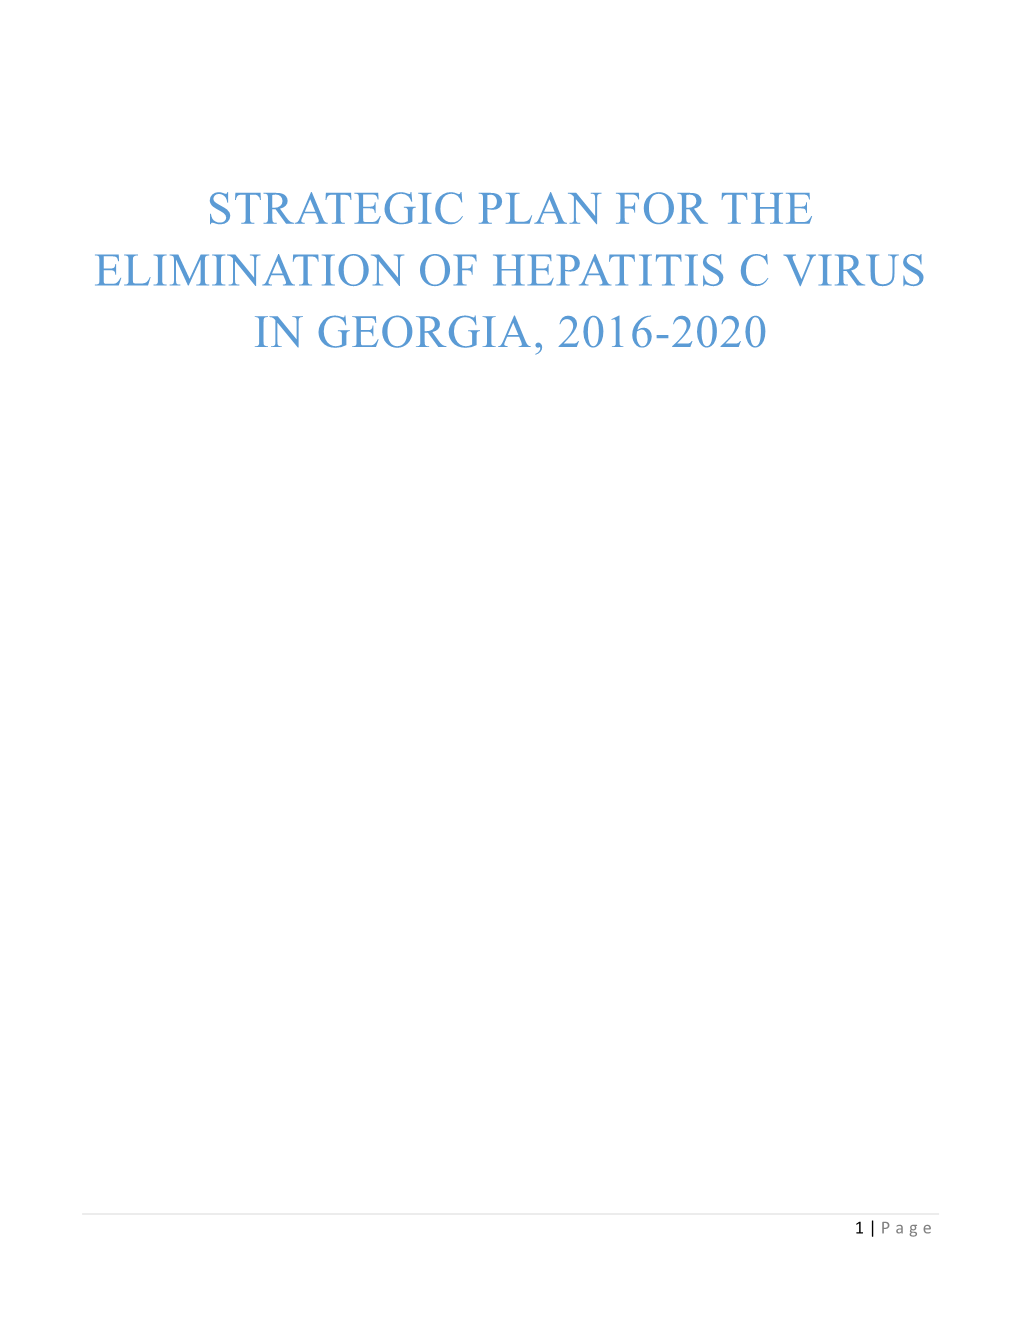 Strategic Plan for the Elimination of Hepatitis C Virus in Georgia, 2016-2020